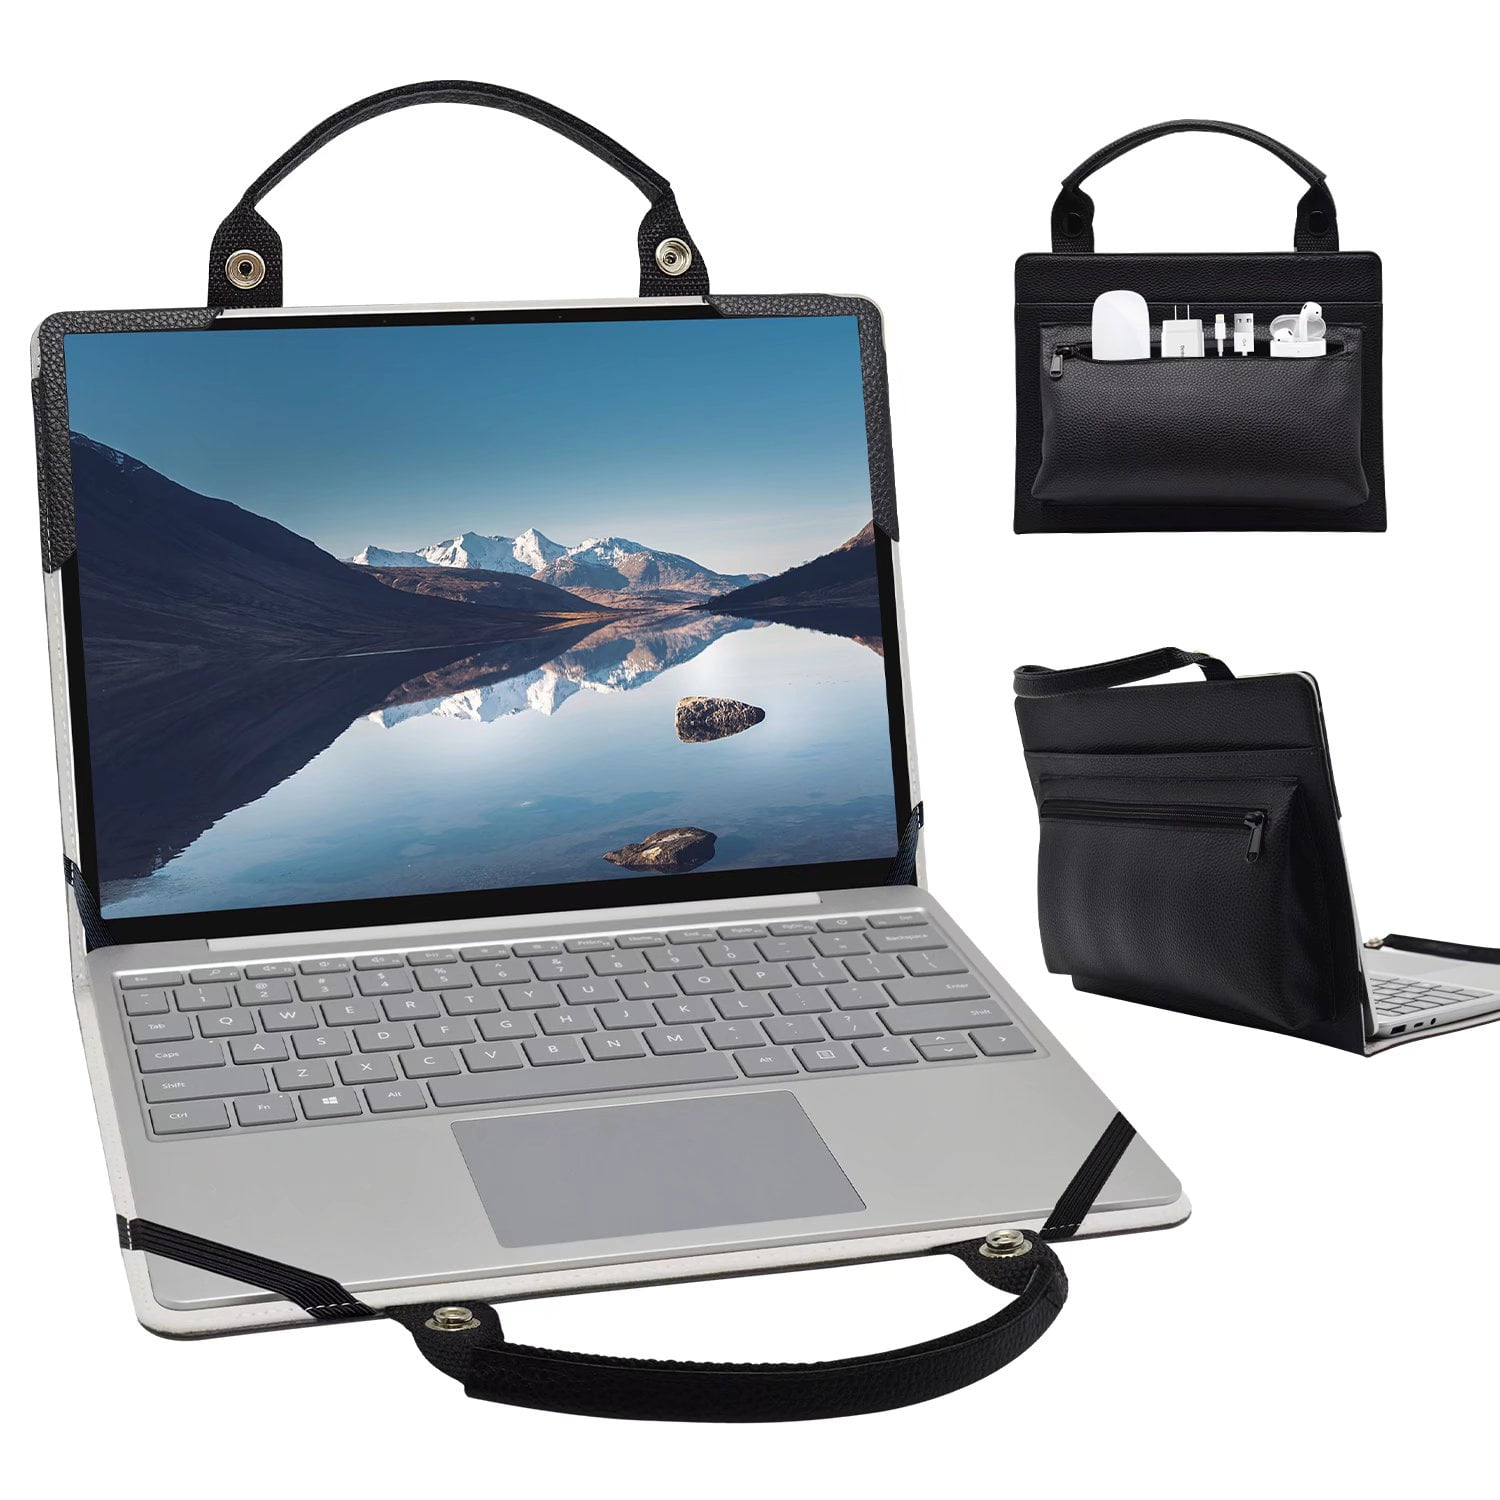 Lenovo Thinkpad X1 Carbon (6th Gen) Laptop Sleeve, Laptop Case for Lenovo Thinkpad X1 Carbon (6th Gen) (7th Gen) with Accessories Bag Handle (Black) Walmart.com